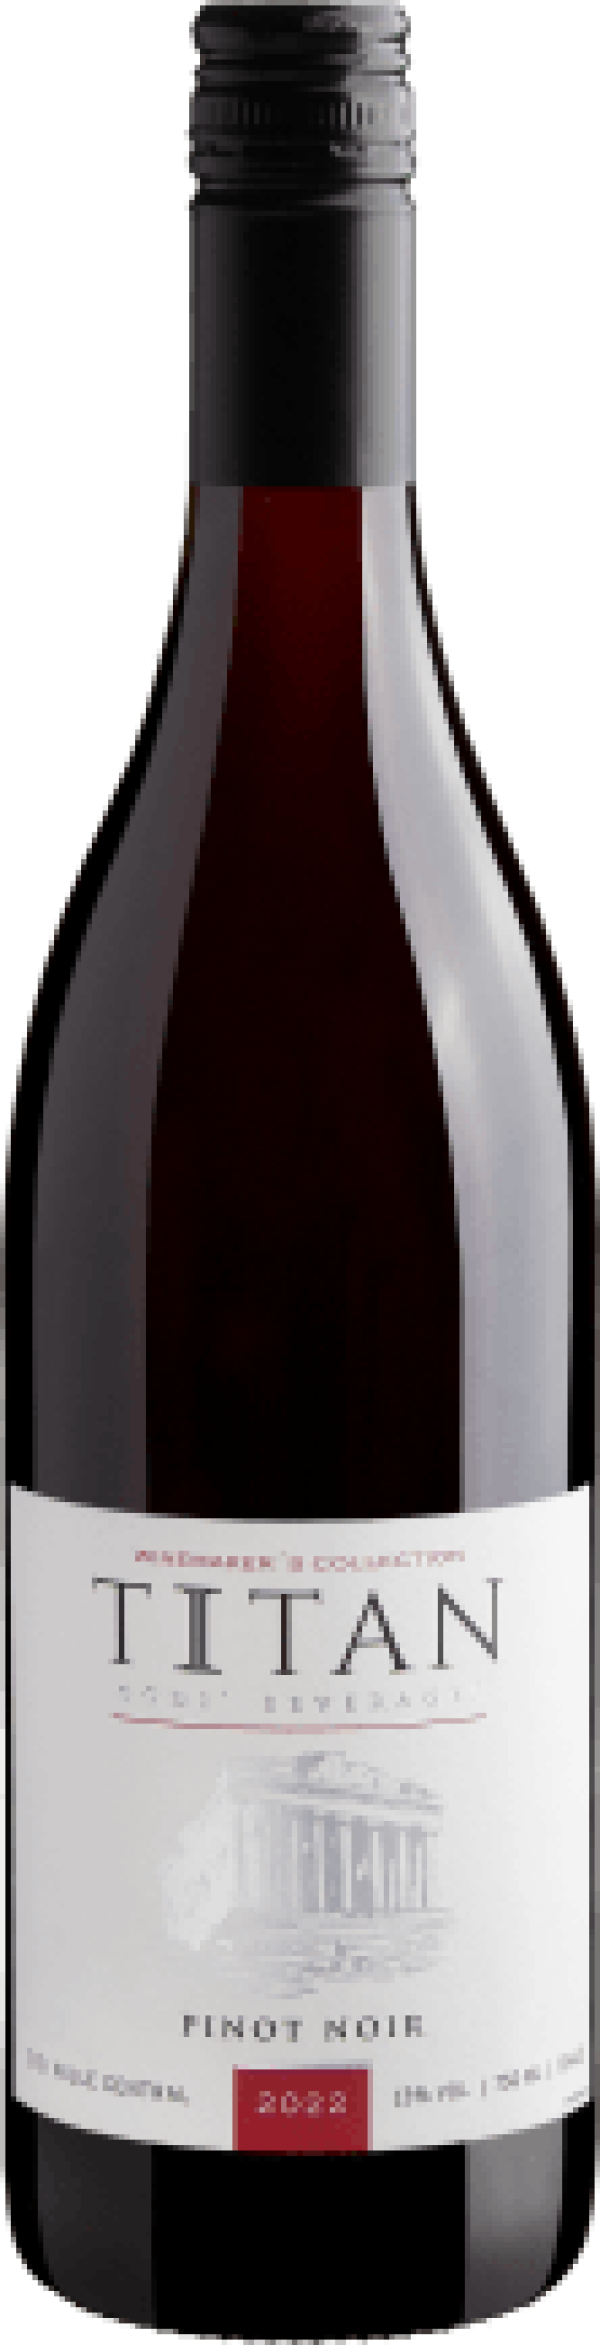 Titan God's Beverages Winemaker’s Collection Pinot Noir Valle Central D.O. 2022